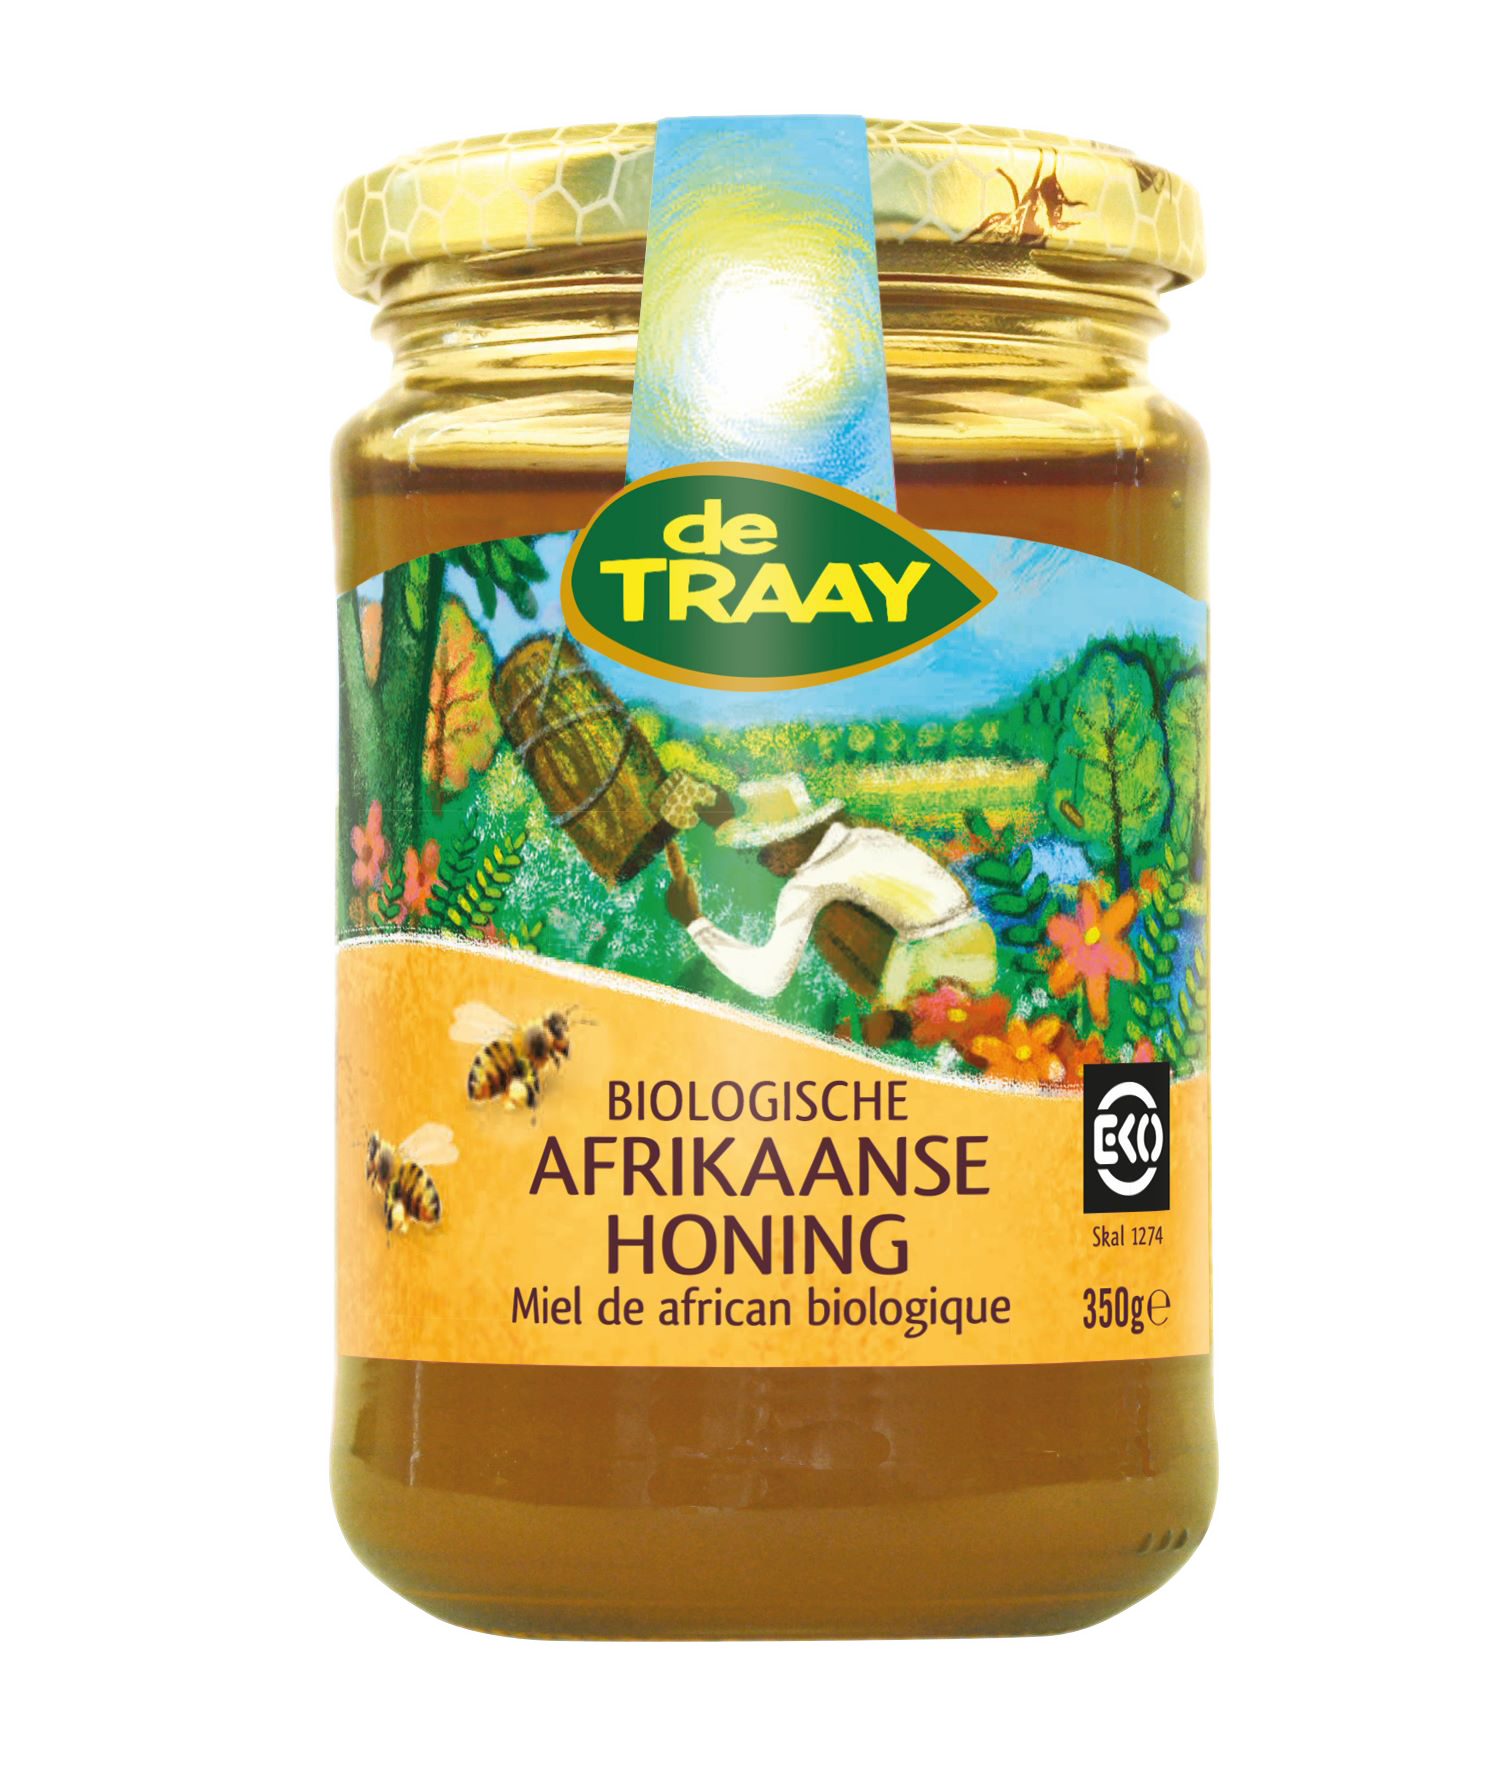 De Traay Afrikaanse honing bio 350g